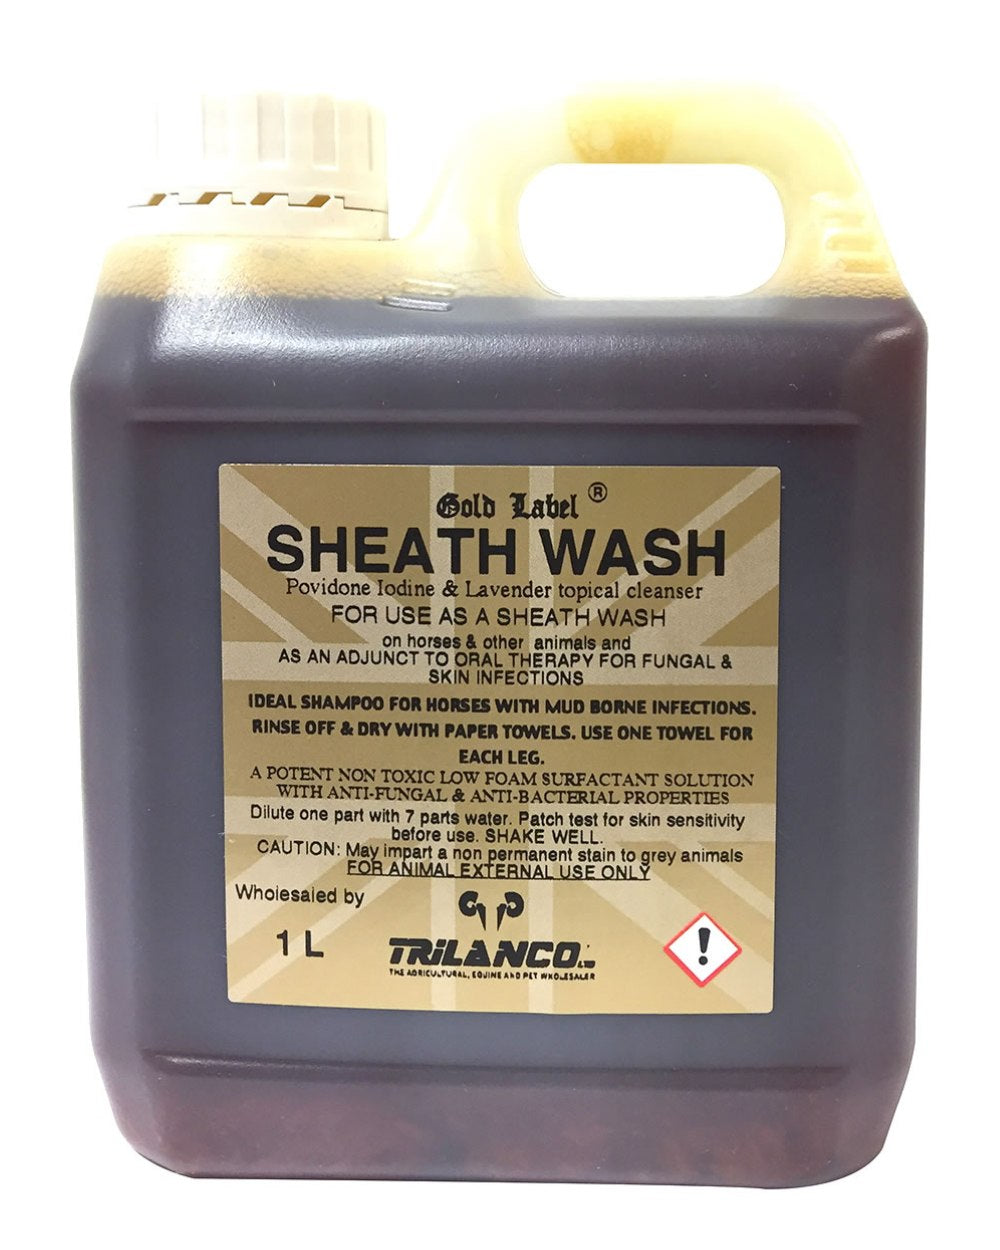 Gold Label Sheath Wash On A White Background